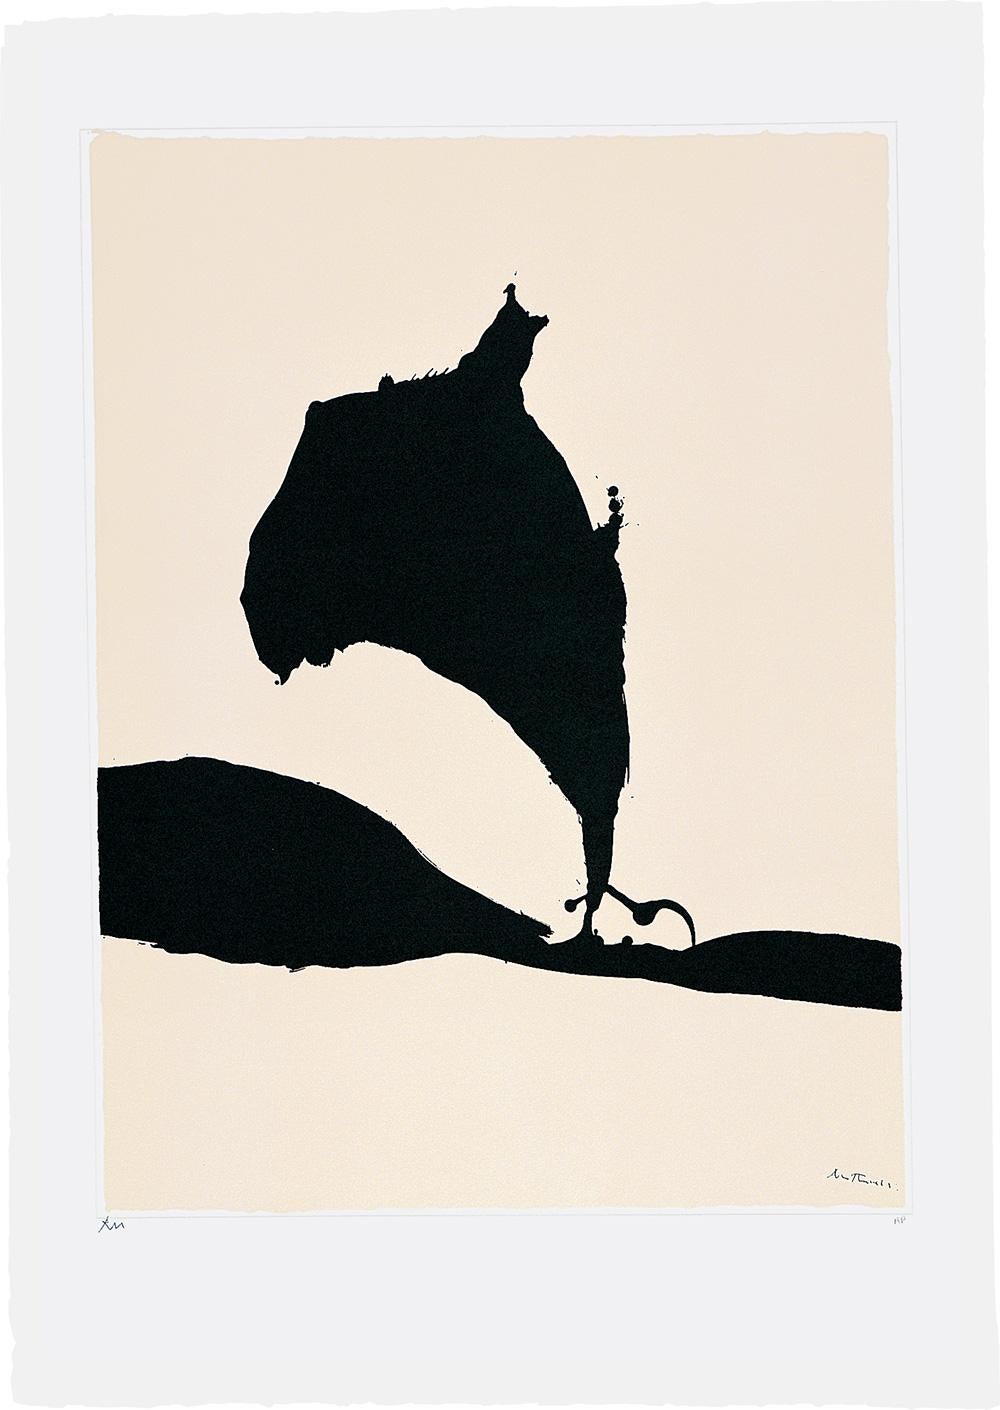 Robert Motherwell Abstract Print - Africa Suite: Africa 9